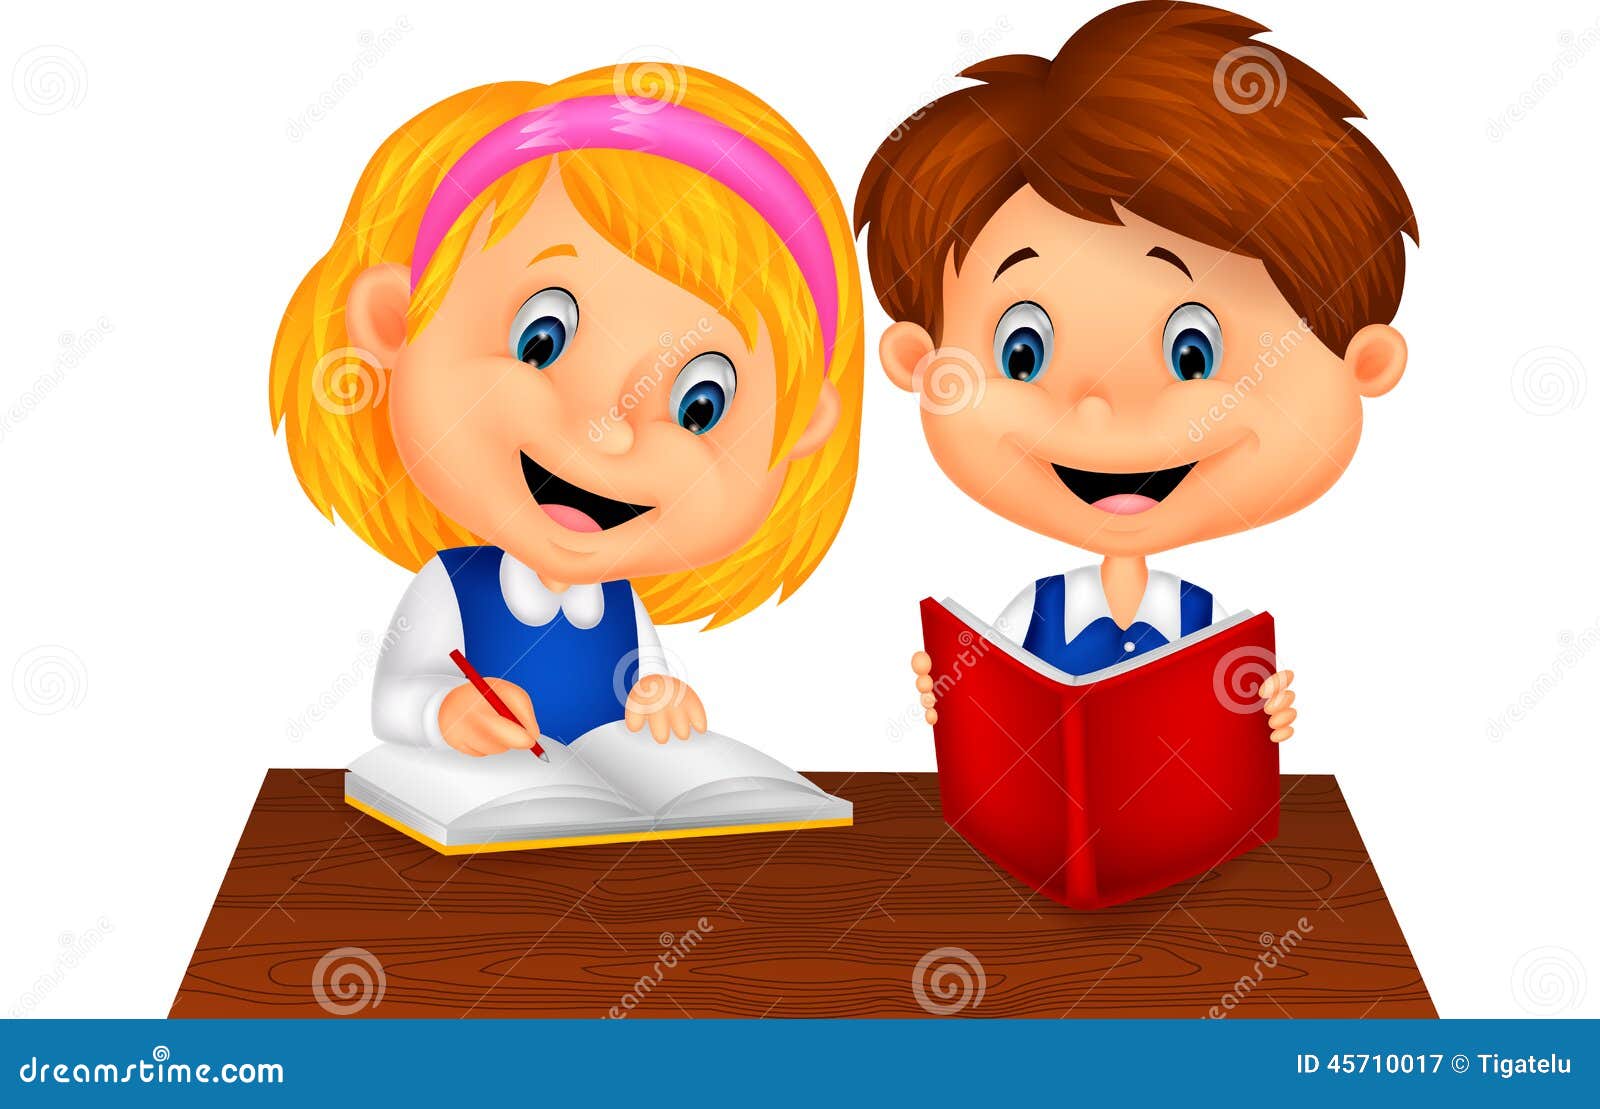 boy and girl study together